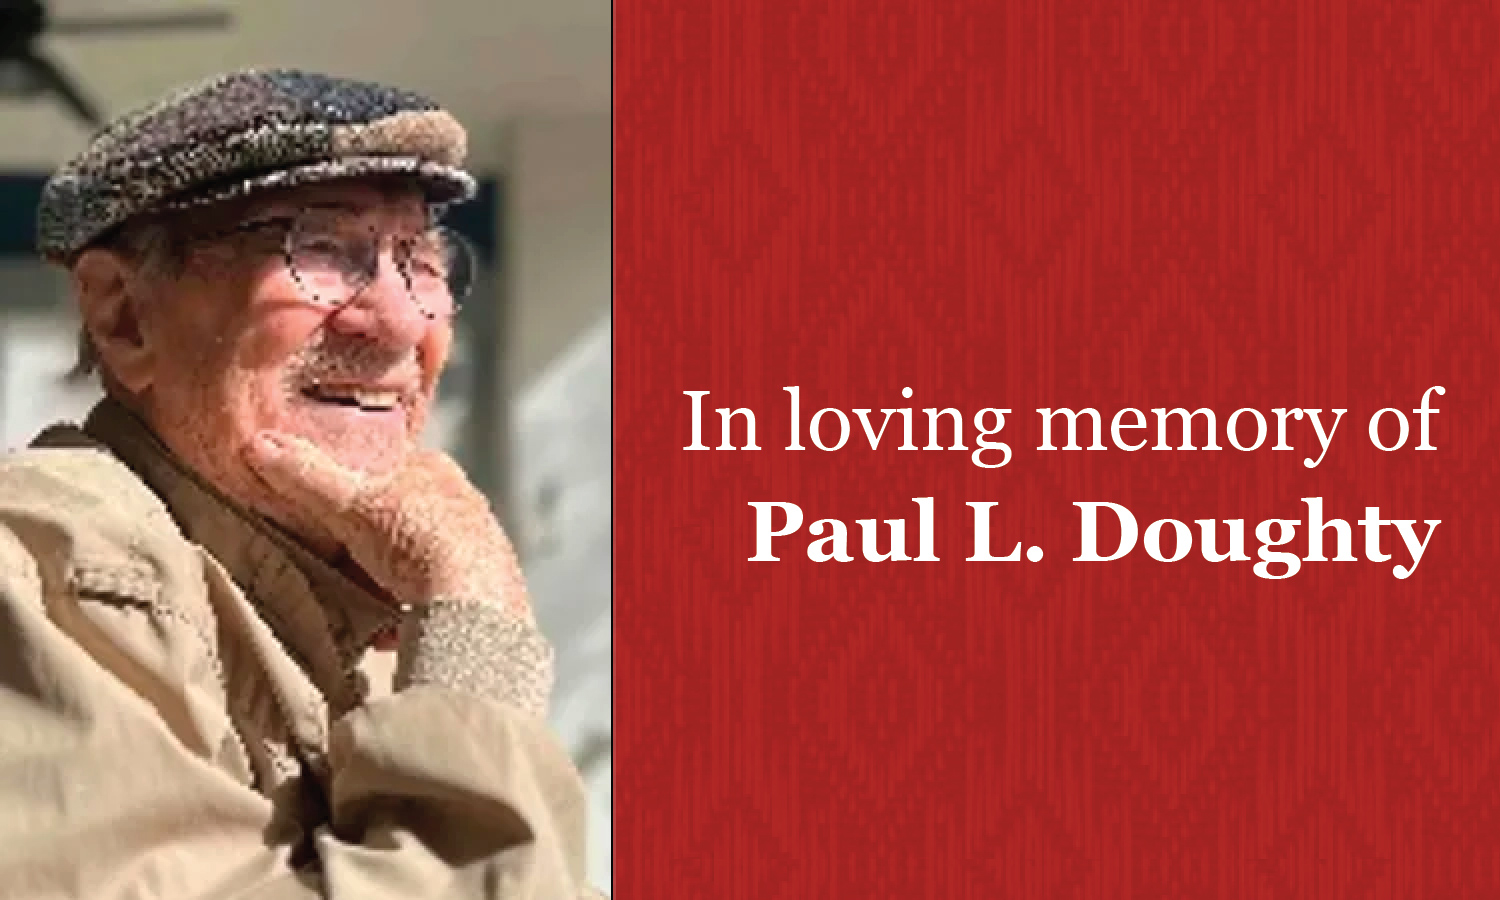 In Loving Memory of Paul L. Doughty